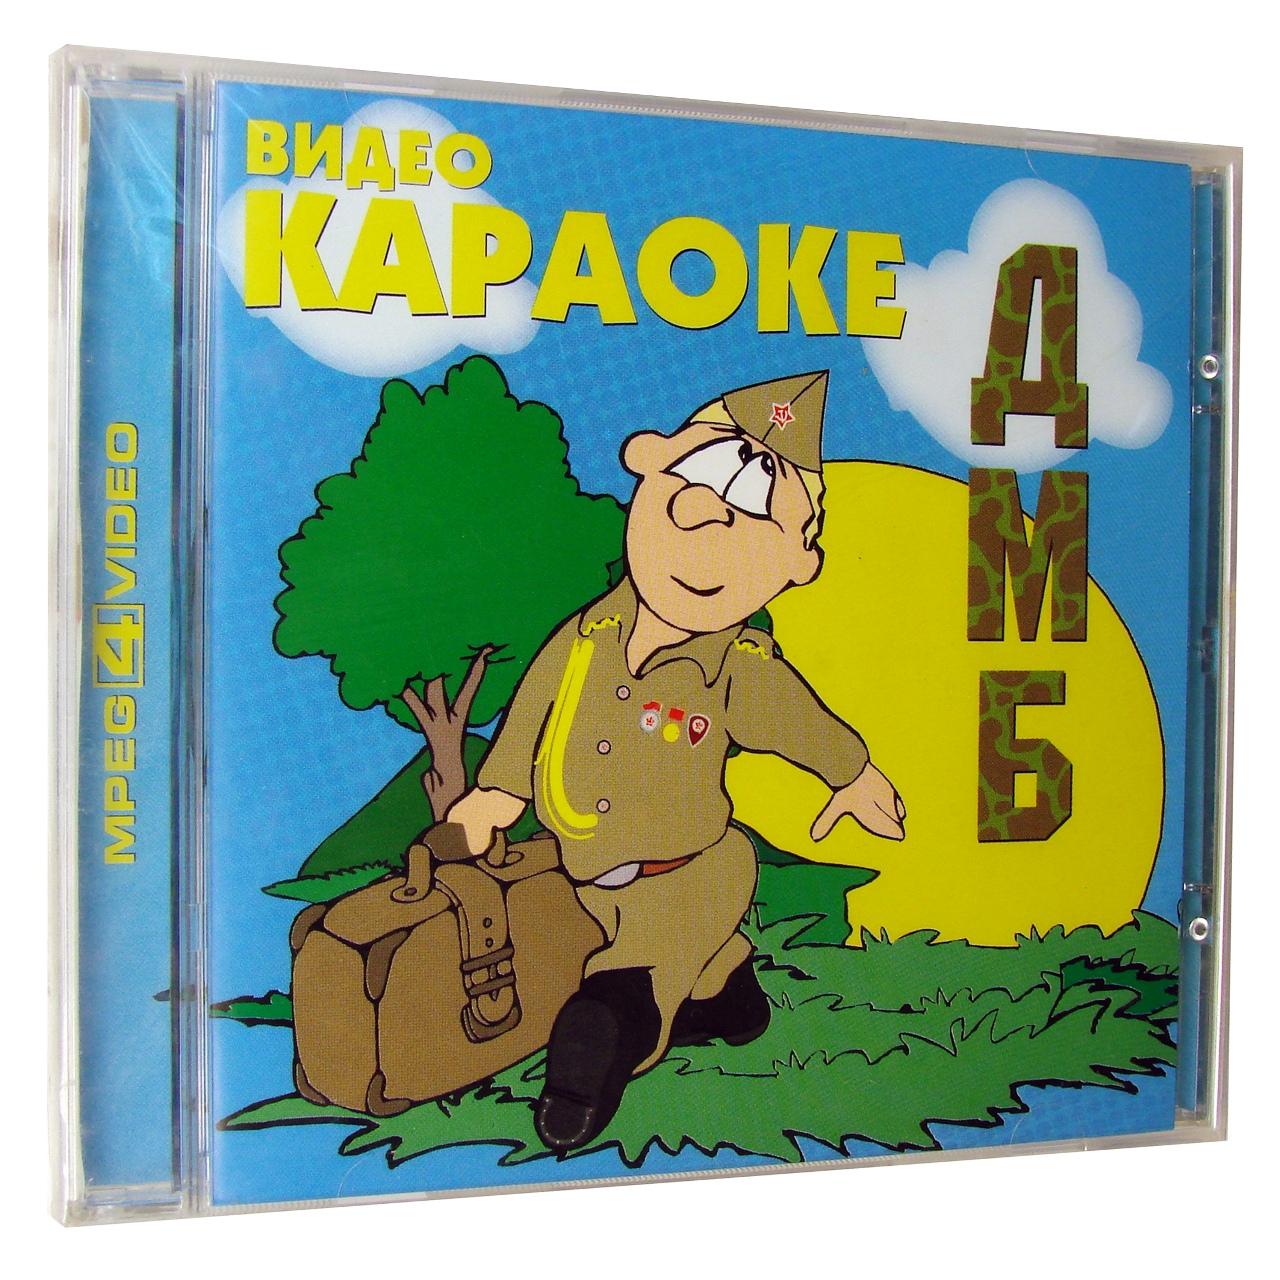 Компьютерный компакт-диск Караоке ДМБ (ПК), фирма "СиДиКом", 1CD